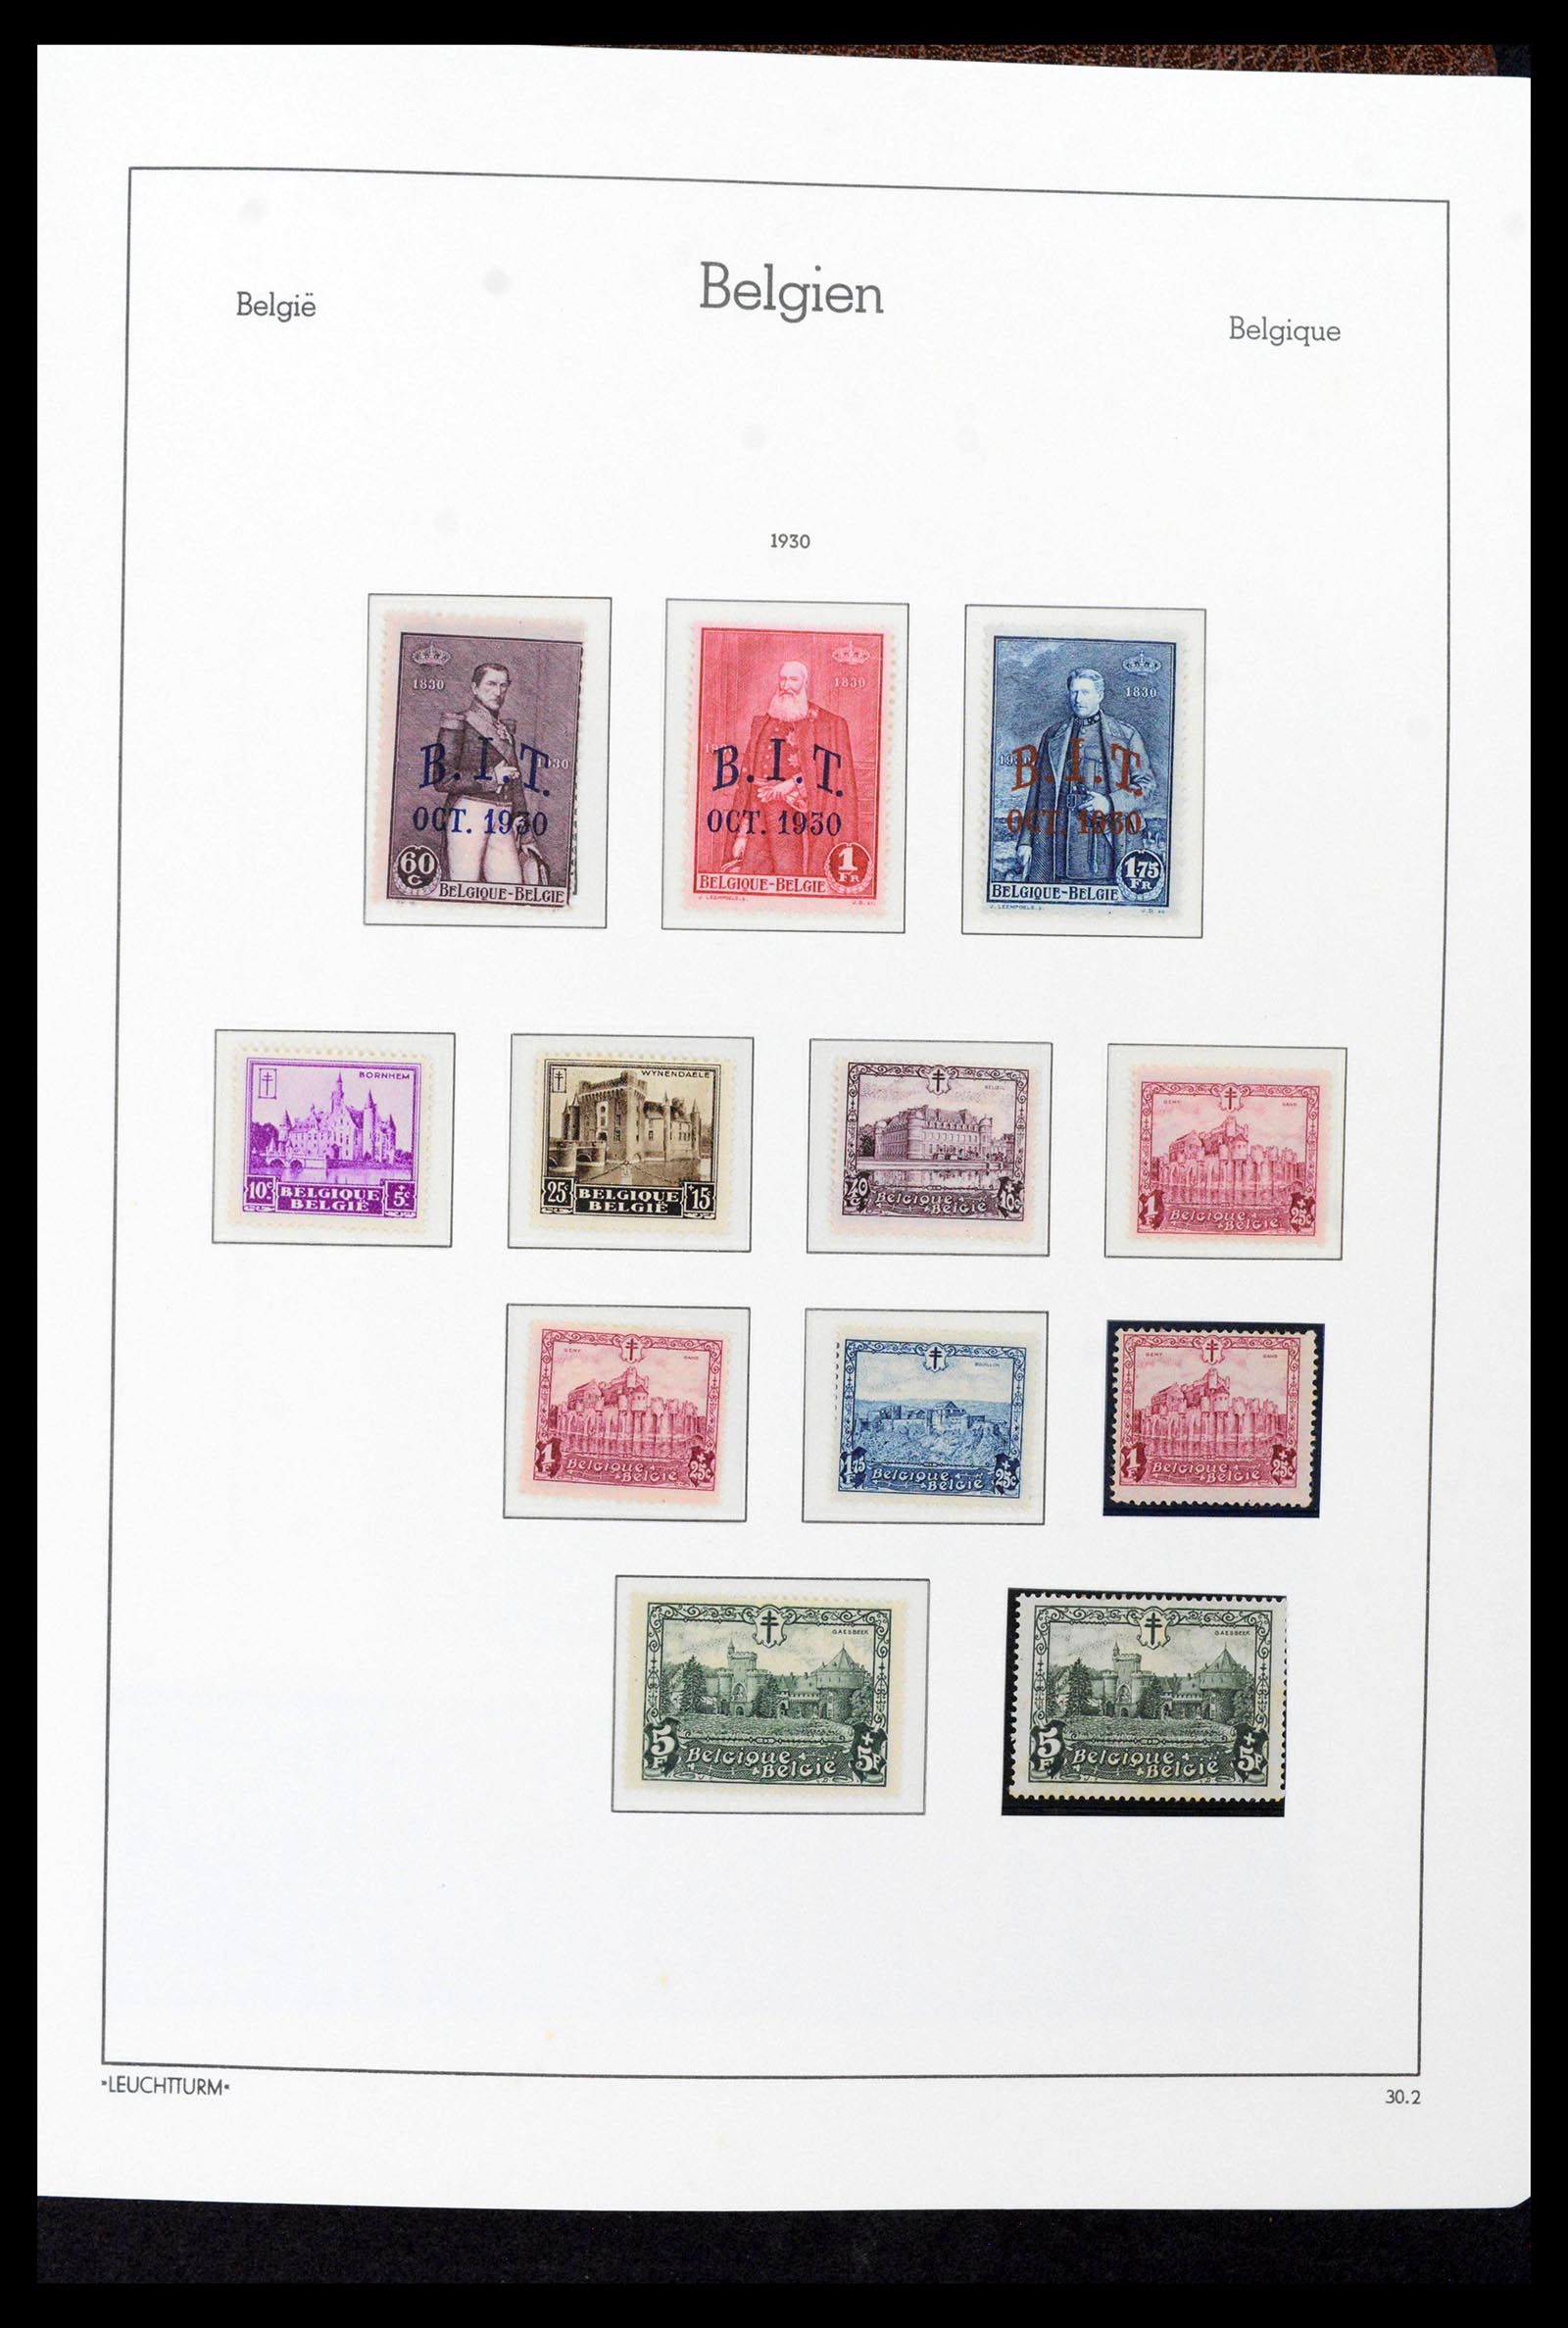 39137 0039 - Stamp collection 39137 Belgium 1849-2002.